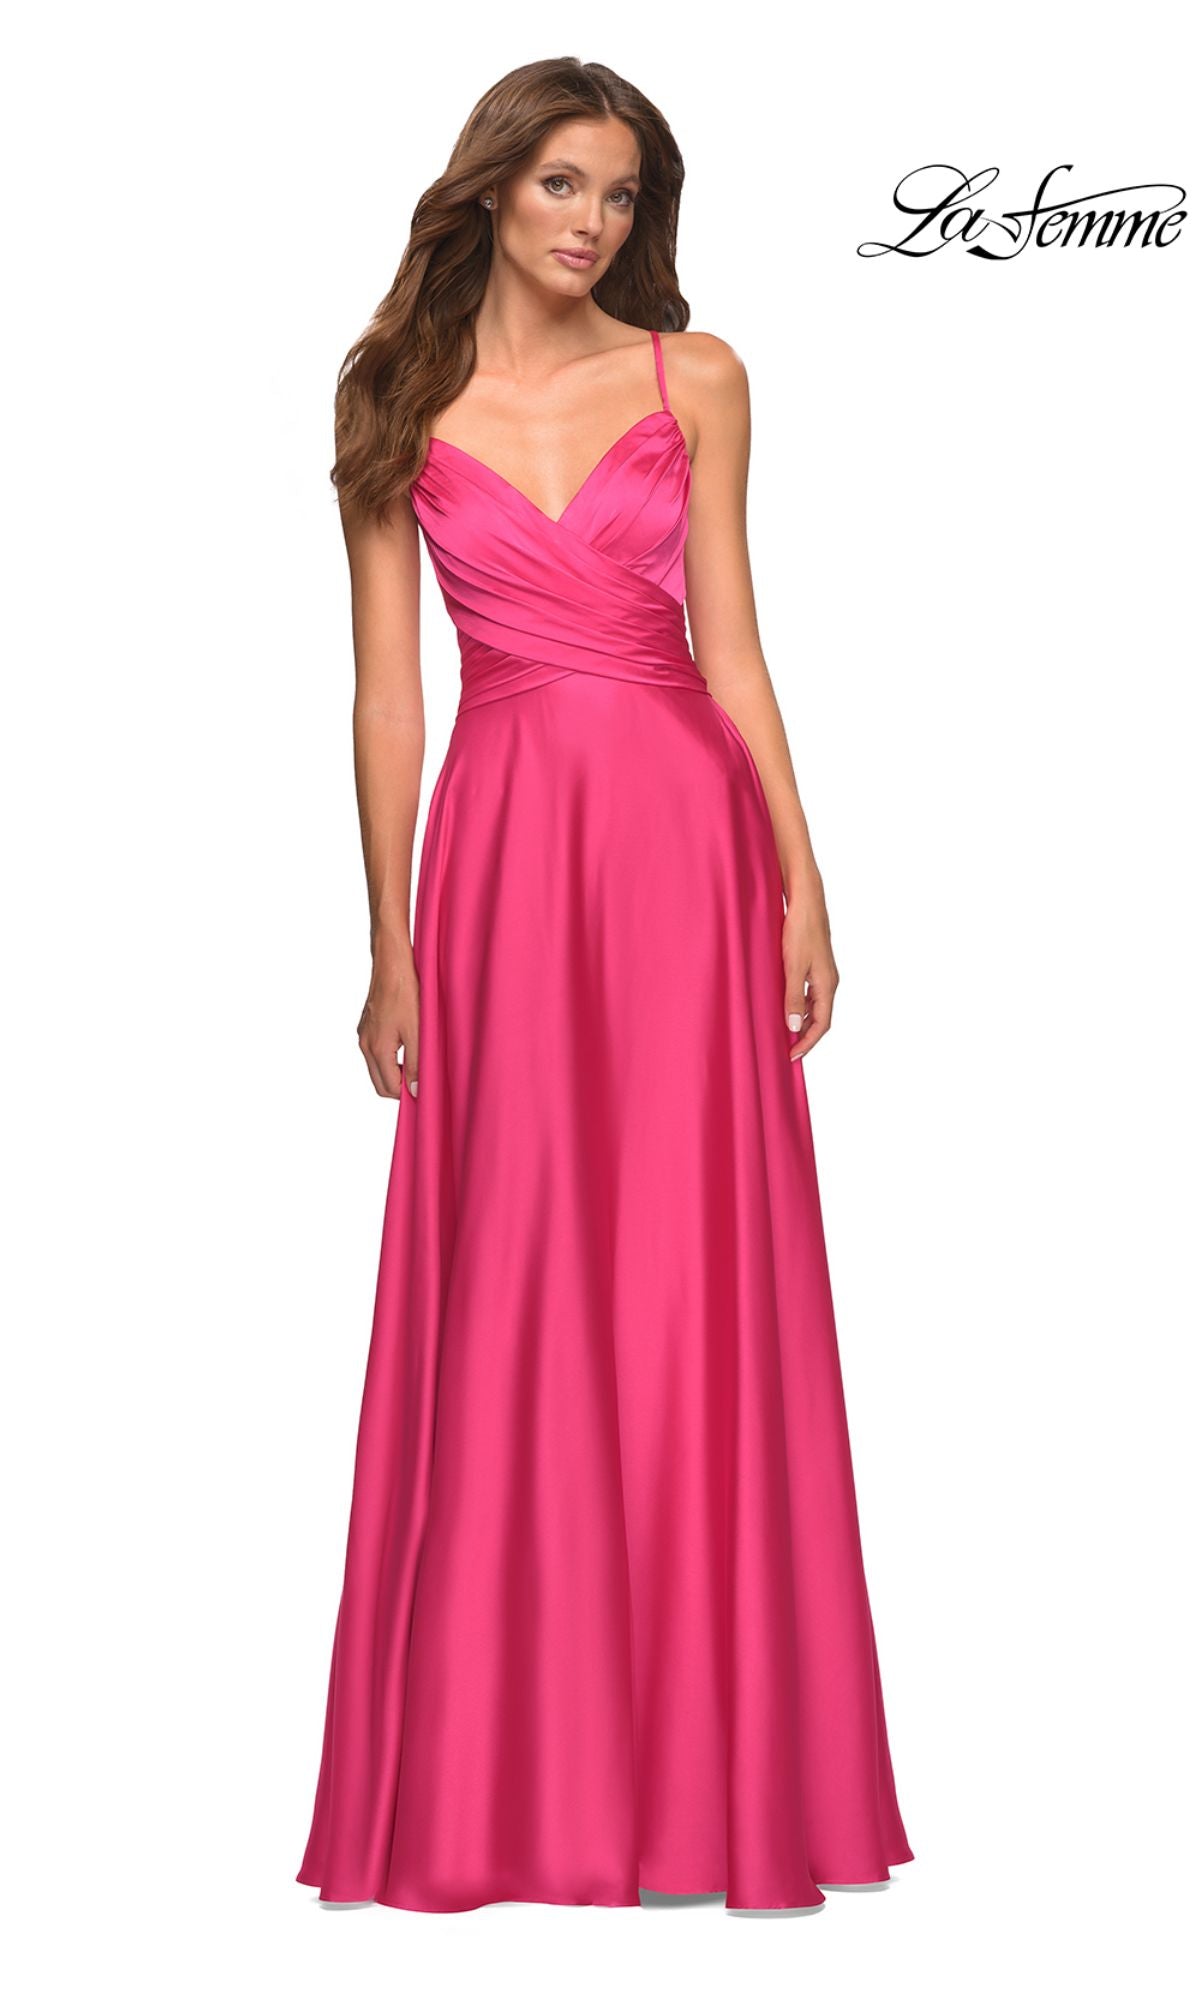 La Femme Backless Hot Pink Long Prom Dress